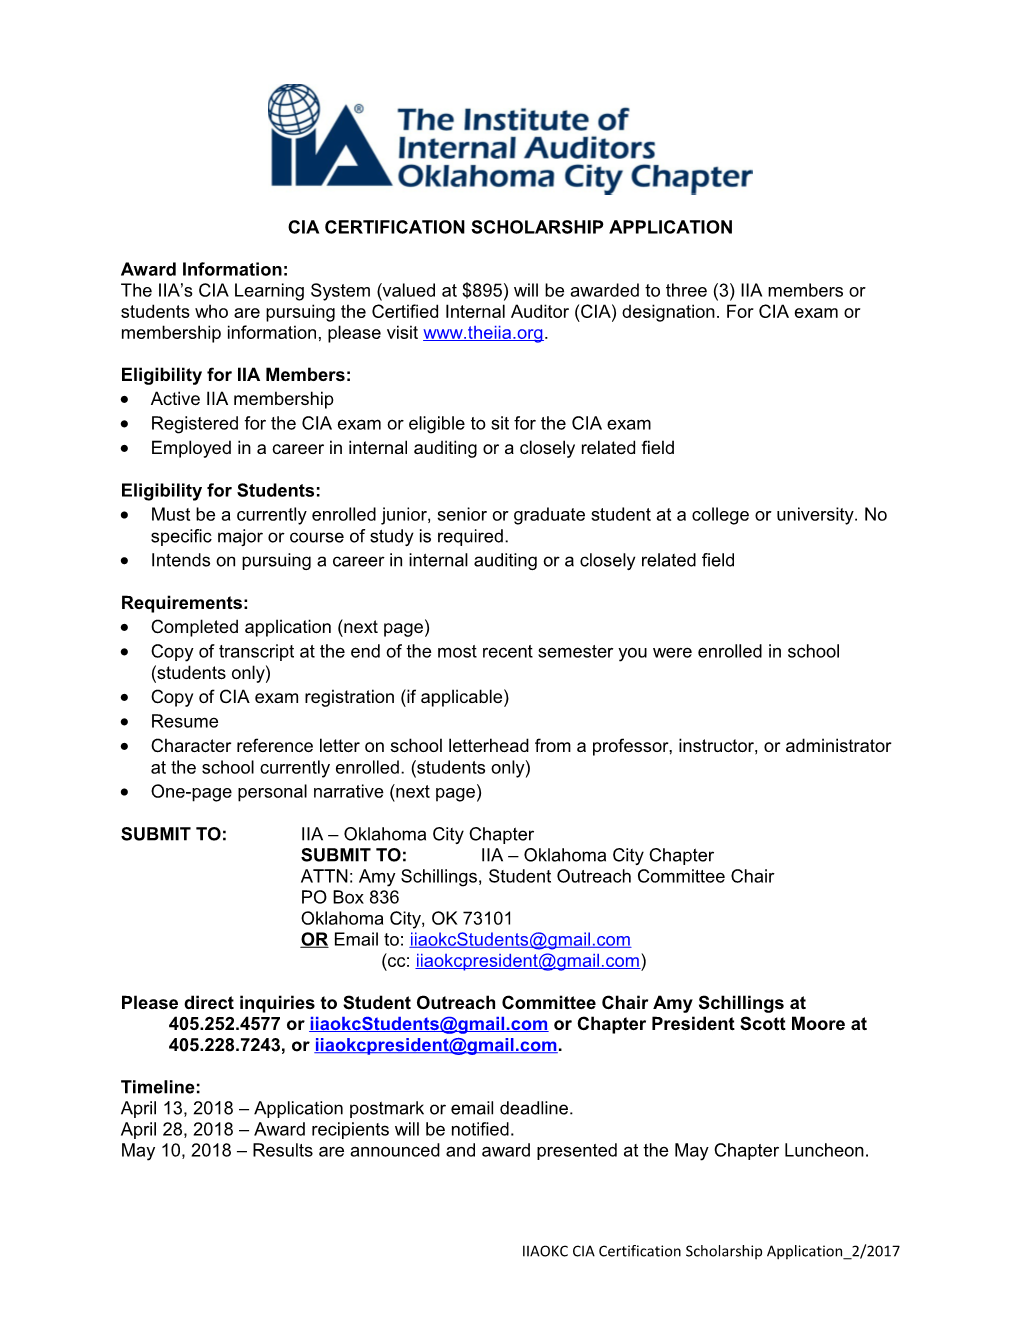 IIA Scholarship Application Form